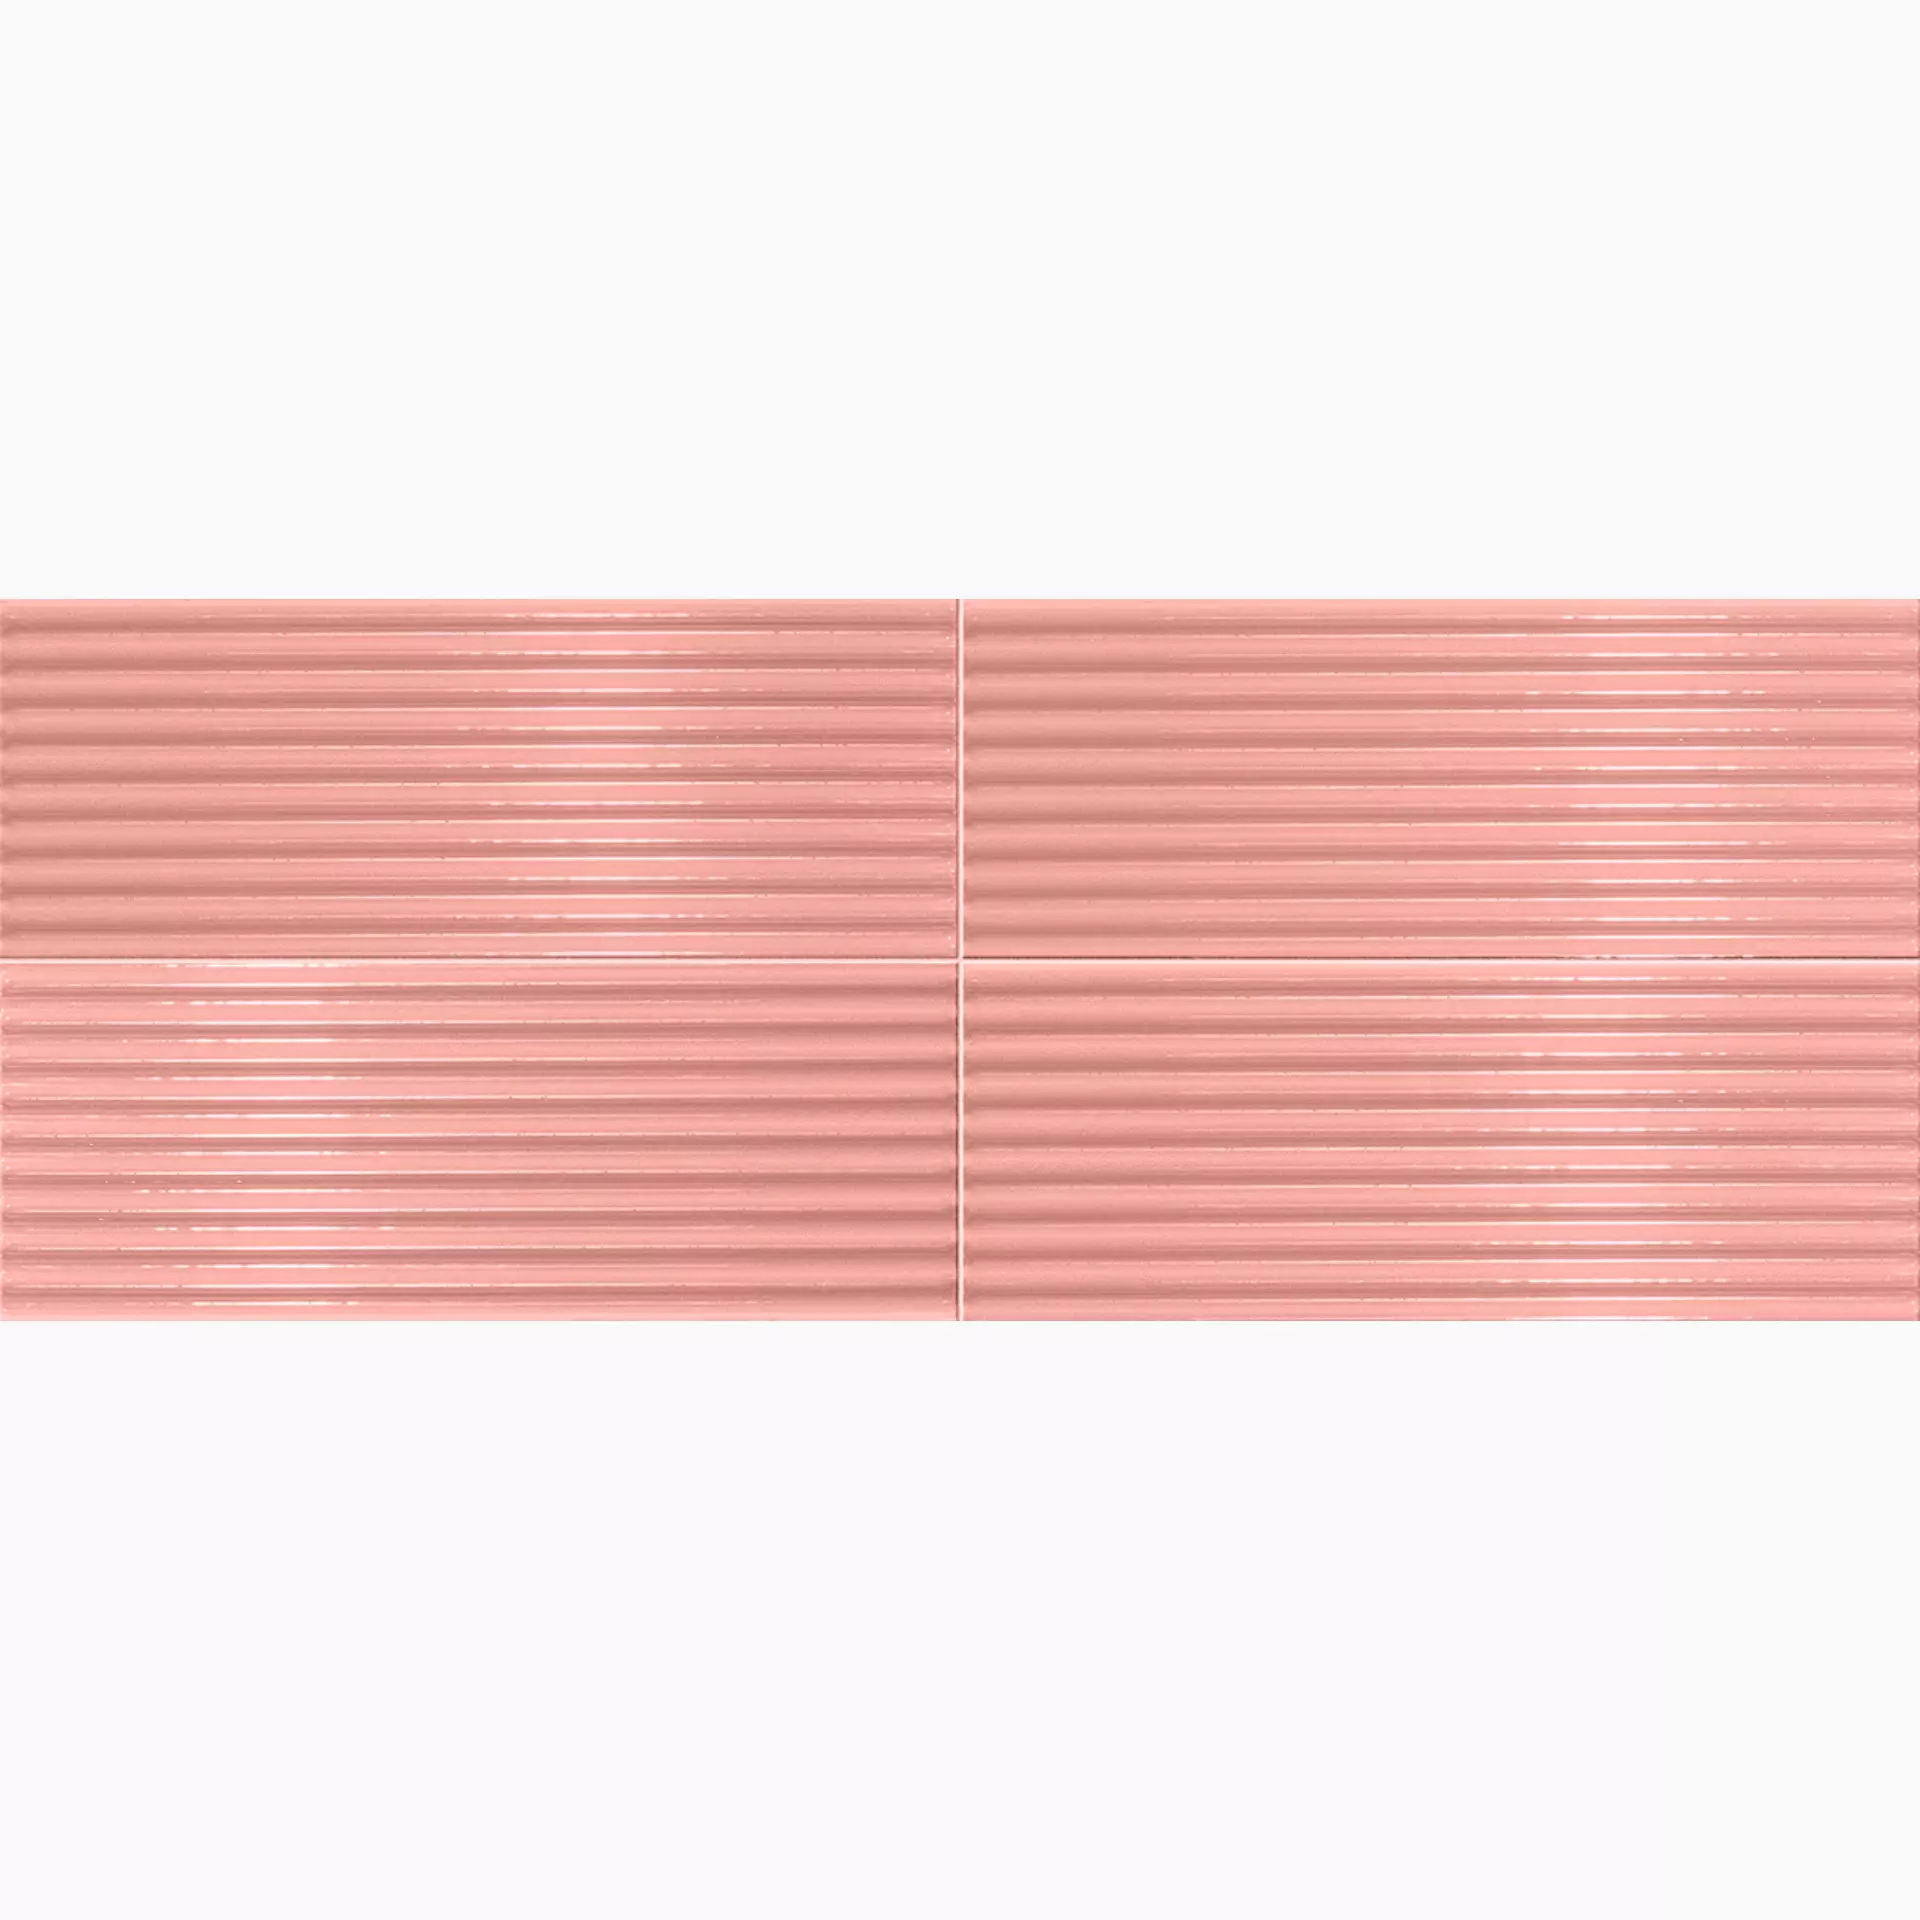 Ergon Abacus Light Pink Lux Light Pink ELHJ glaenzend struktur 7,5x20cm Plisse 11,5mm